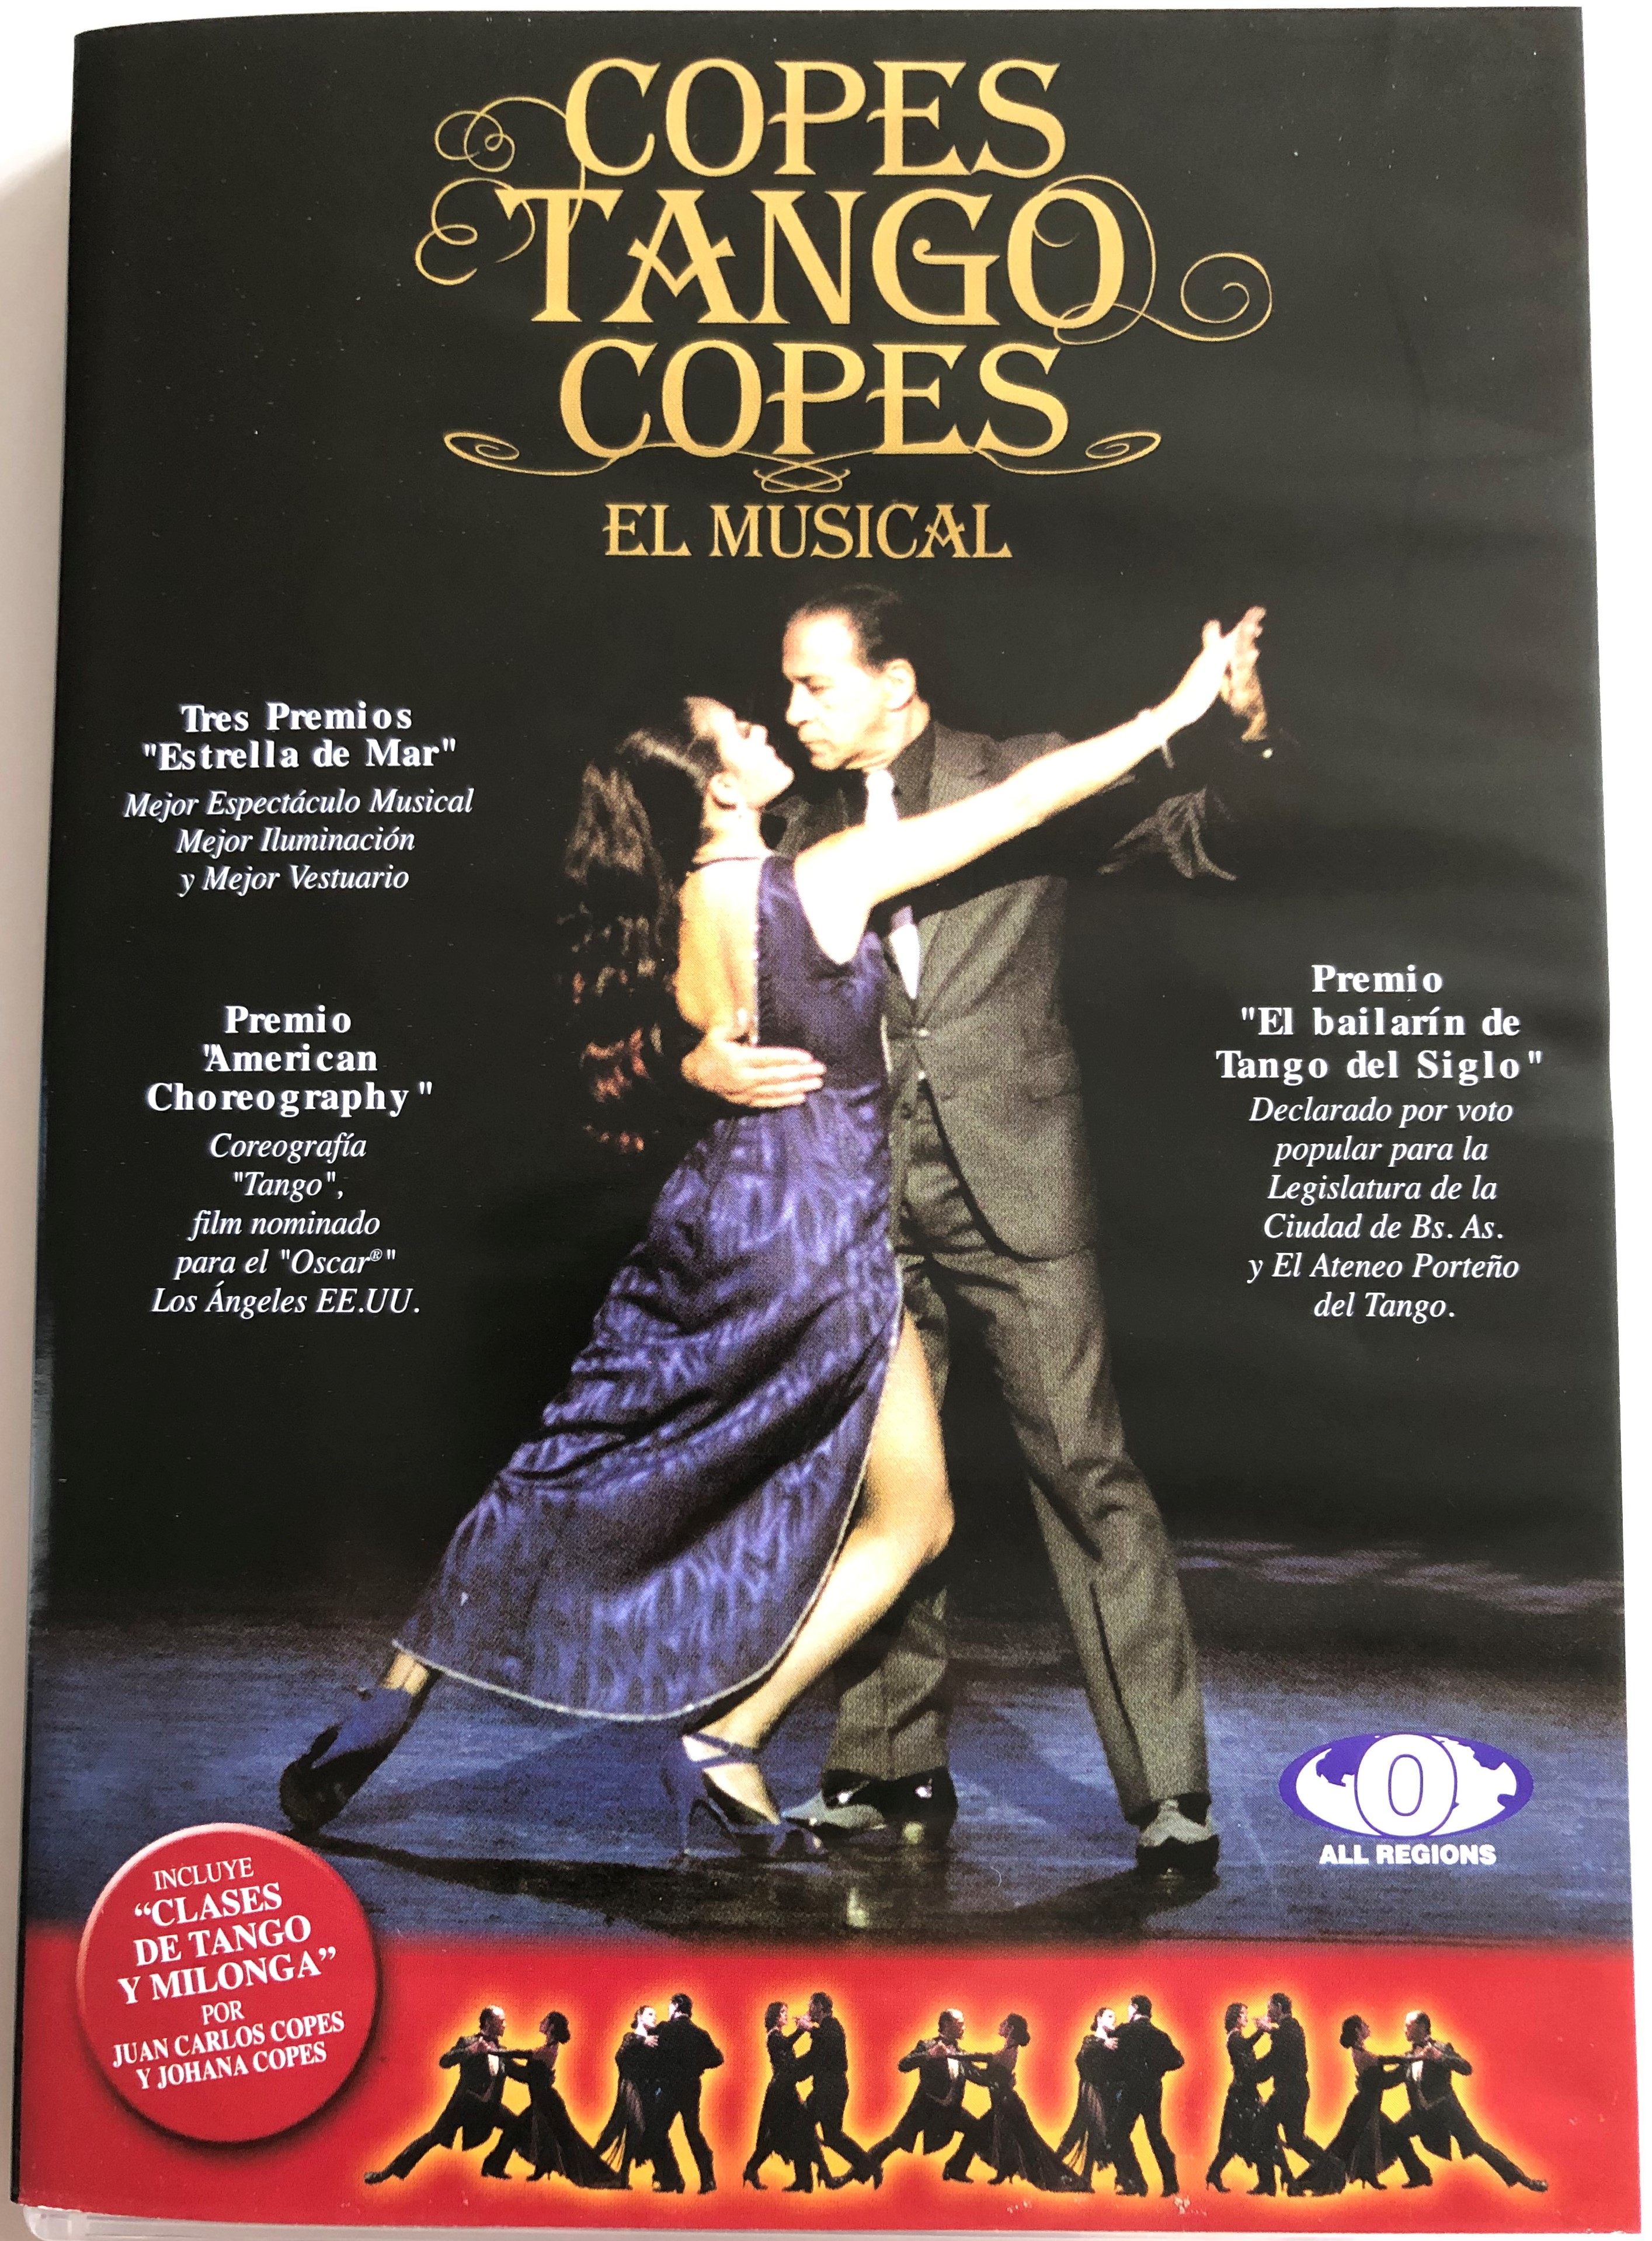 Copes Tango Copes DVD El Musical / Tango musical performance and tango  lessons / Directed by Juan Carlos Copes, Alberto Bolos / Clases de Tango y  Milonga - bibleinmylanguage